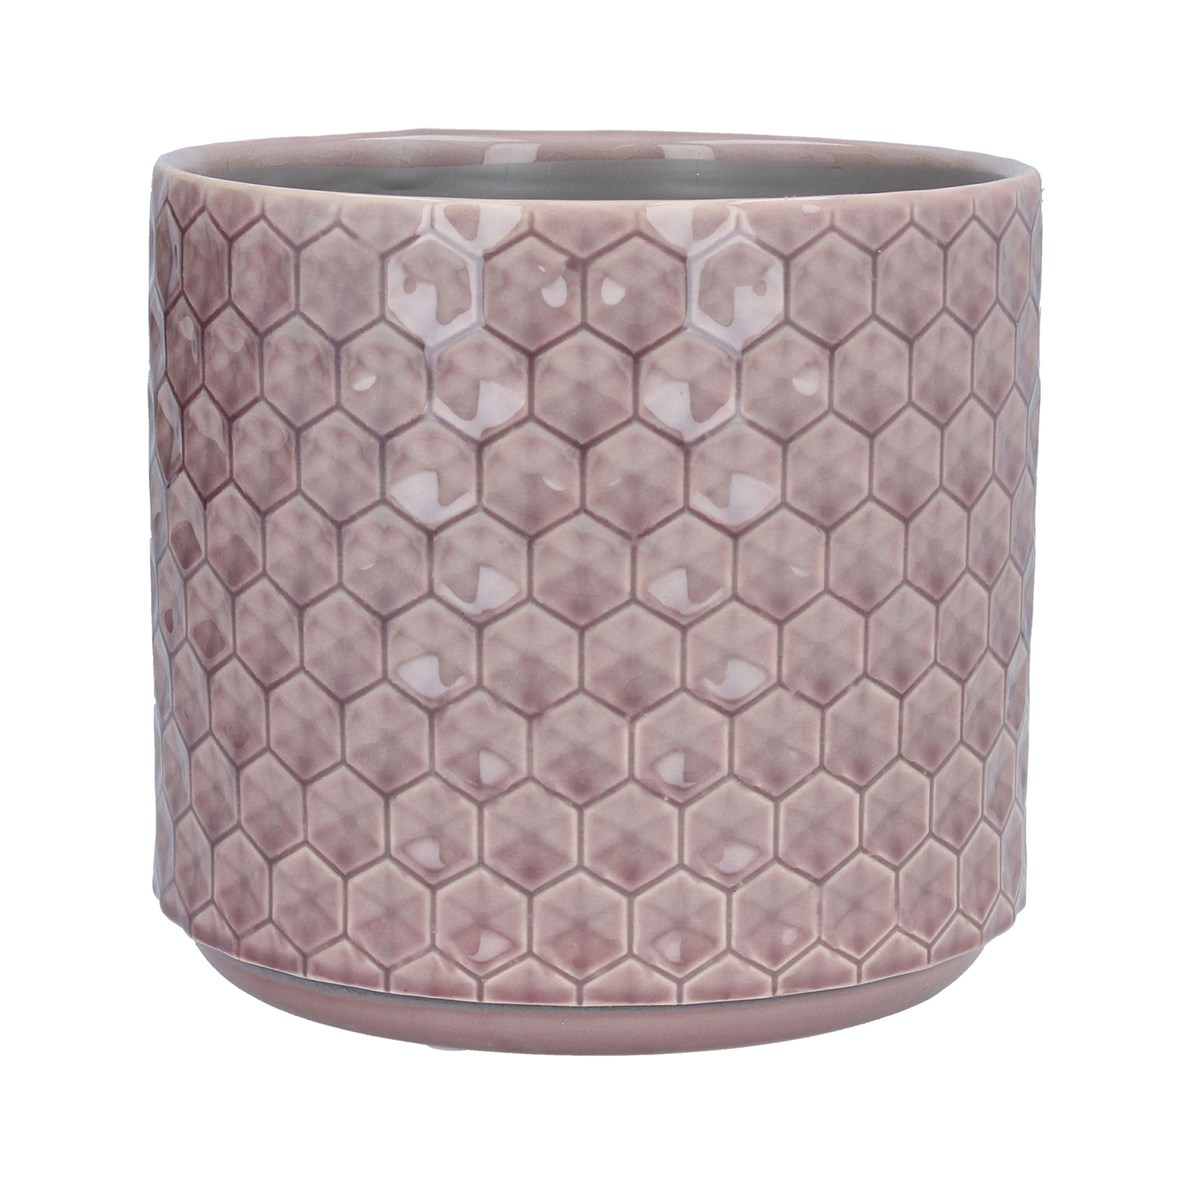 Gisela Graham Dusky Mauve Honeycomb Ceramic Pot Cover, Large